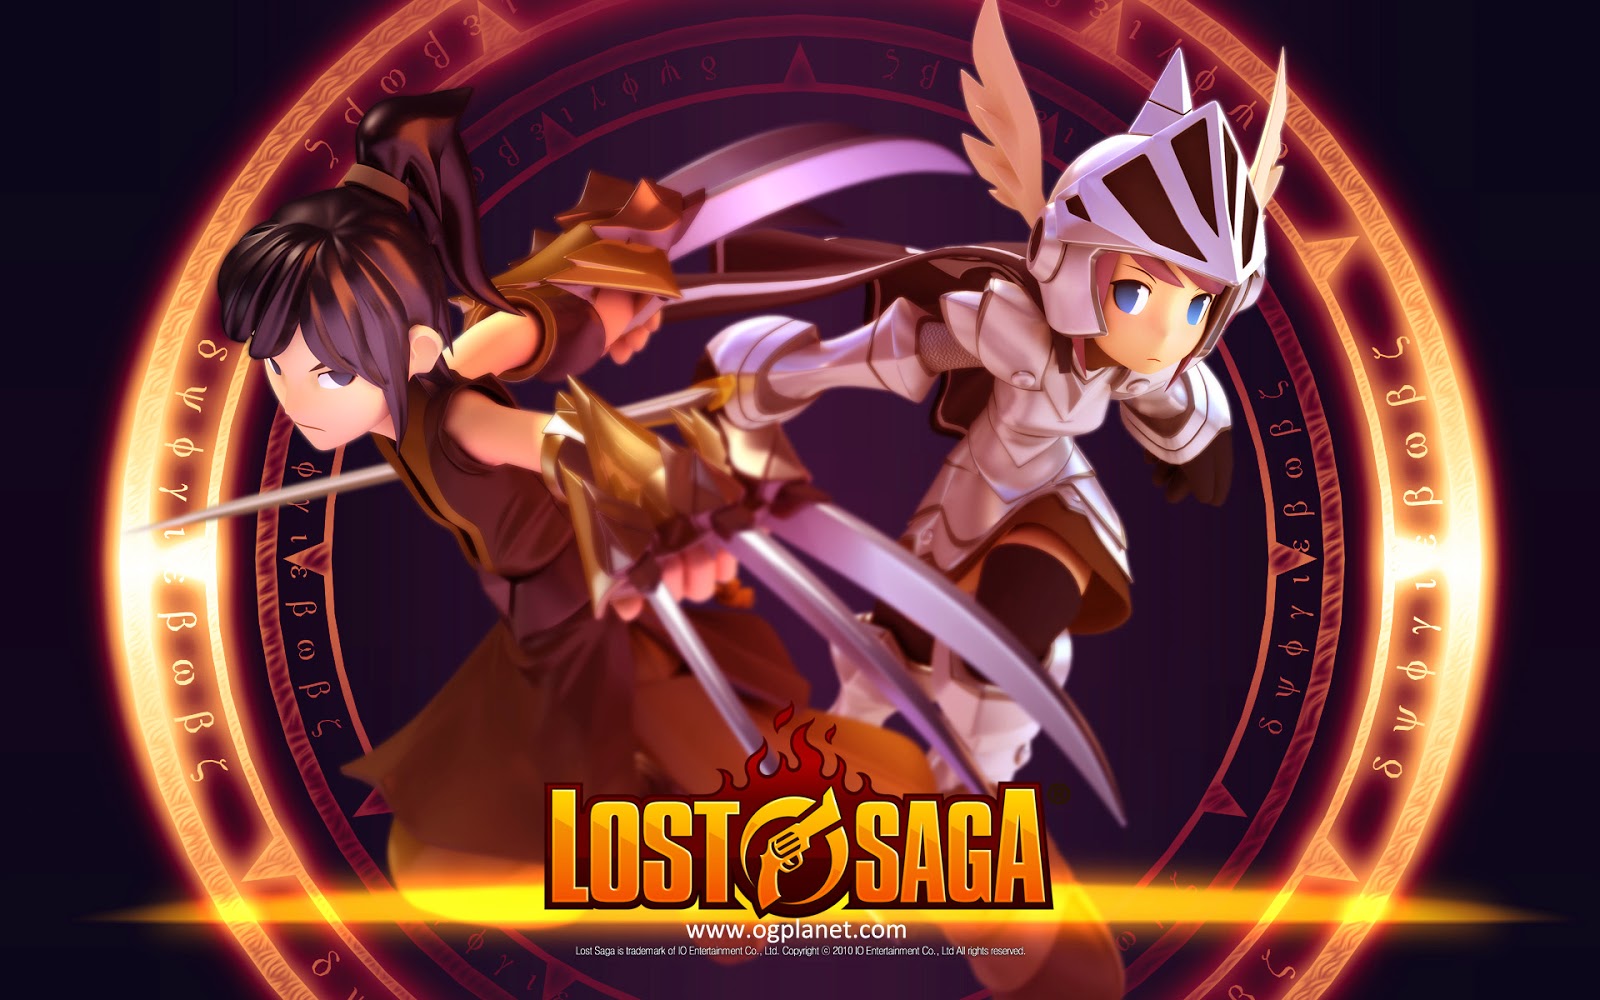 Cheat Lost Saga 29 Desember 2014